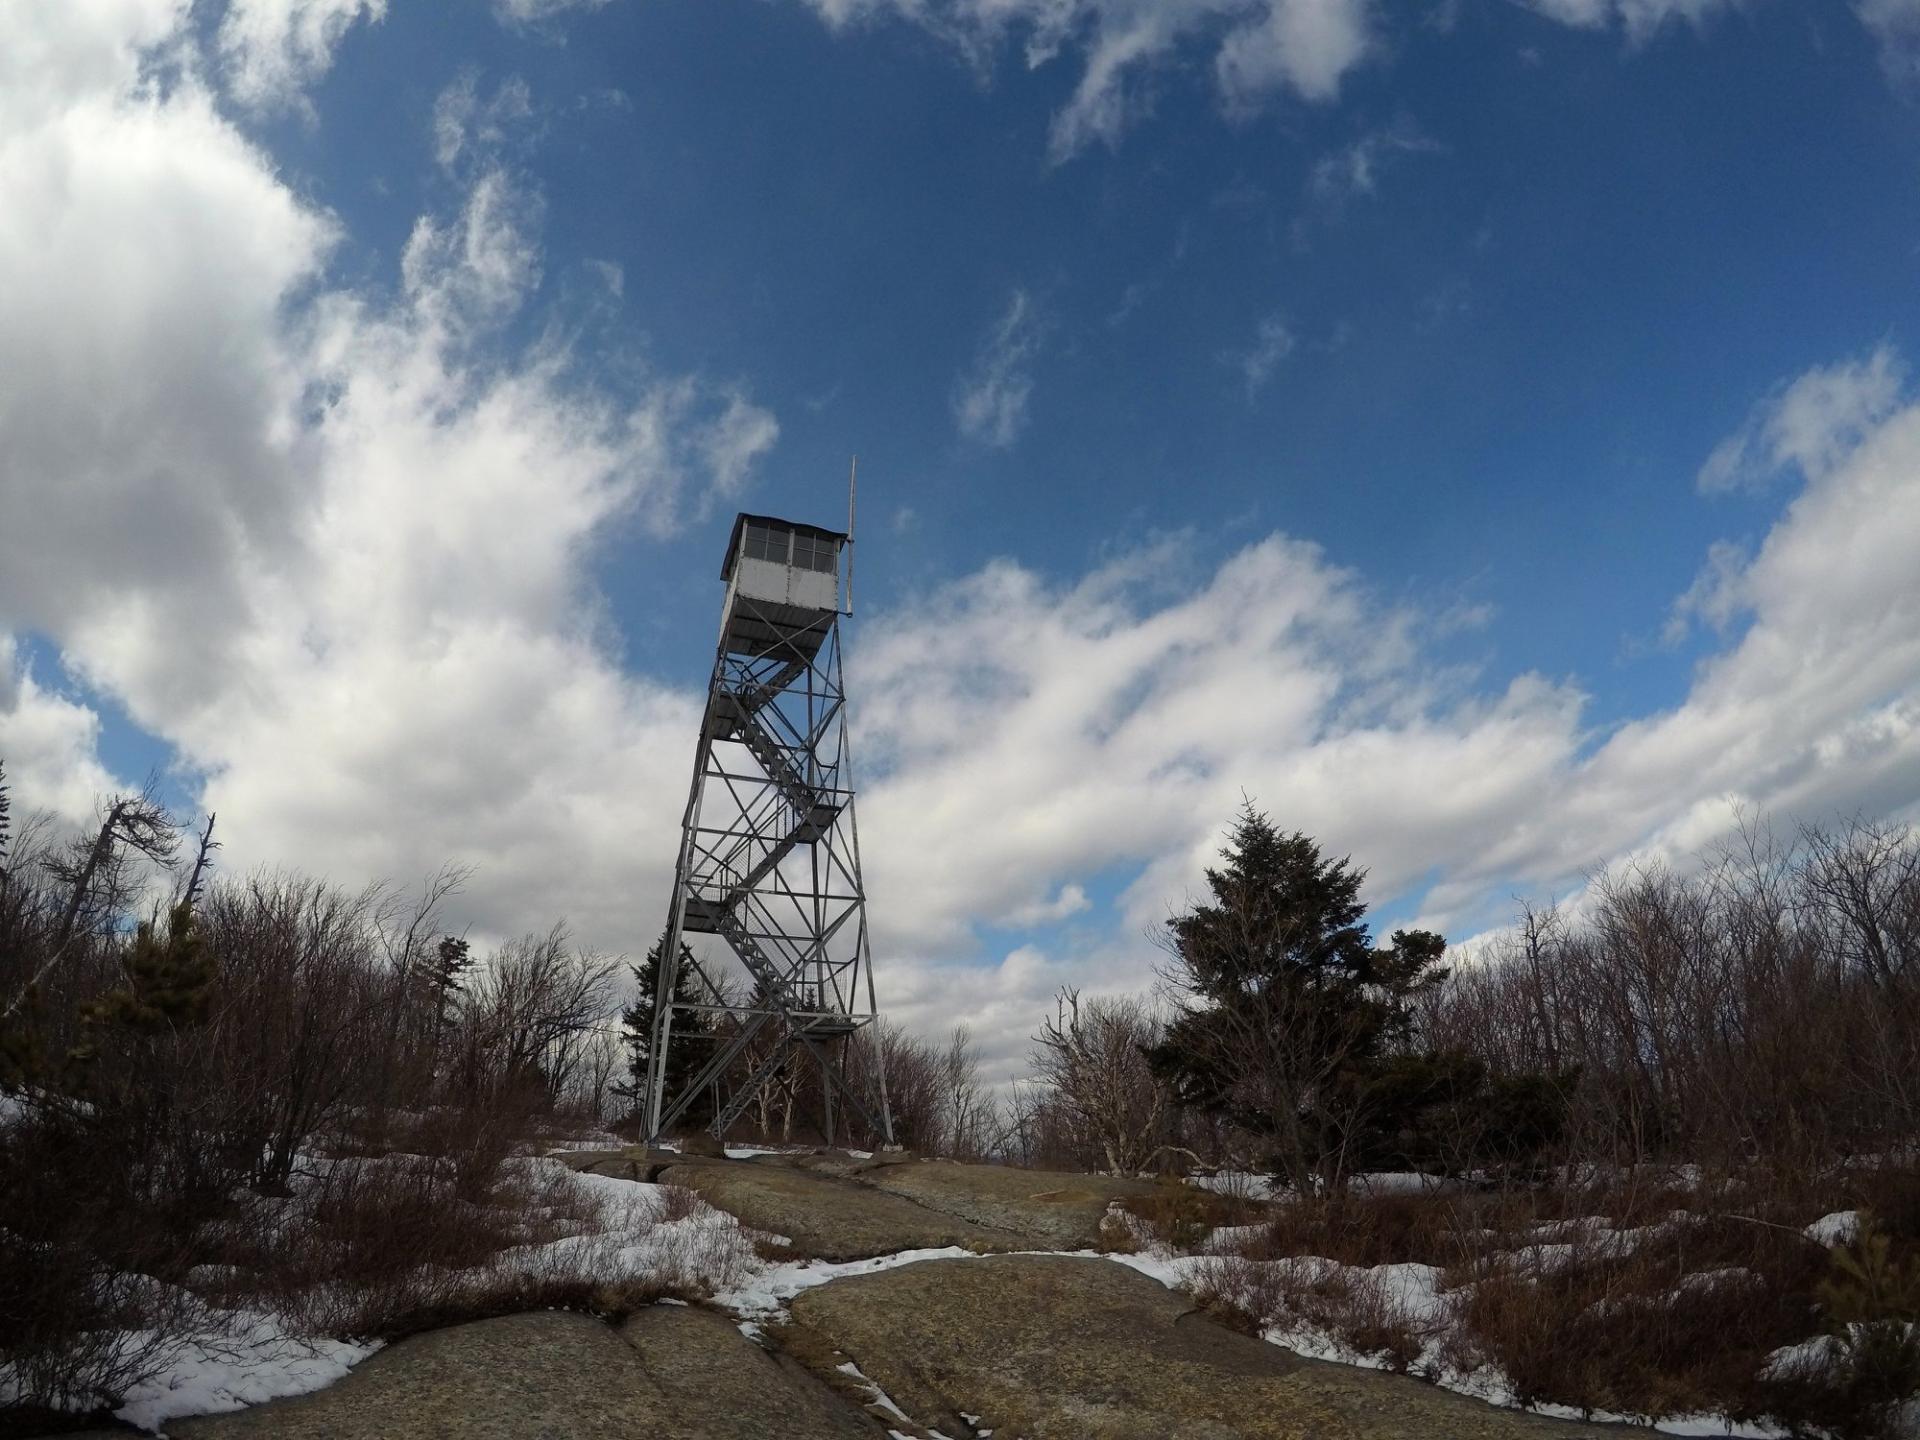 A tall steel firetower on a mountain